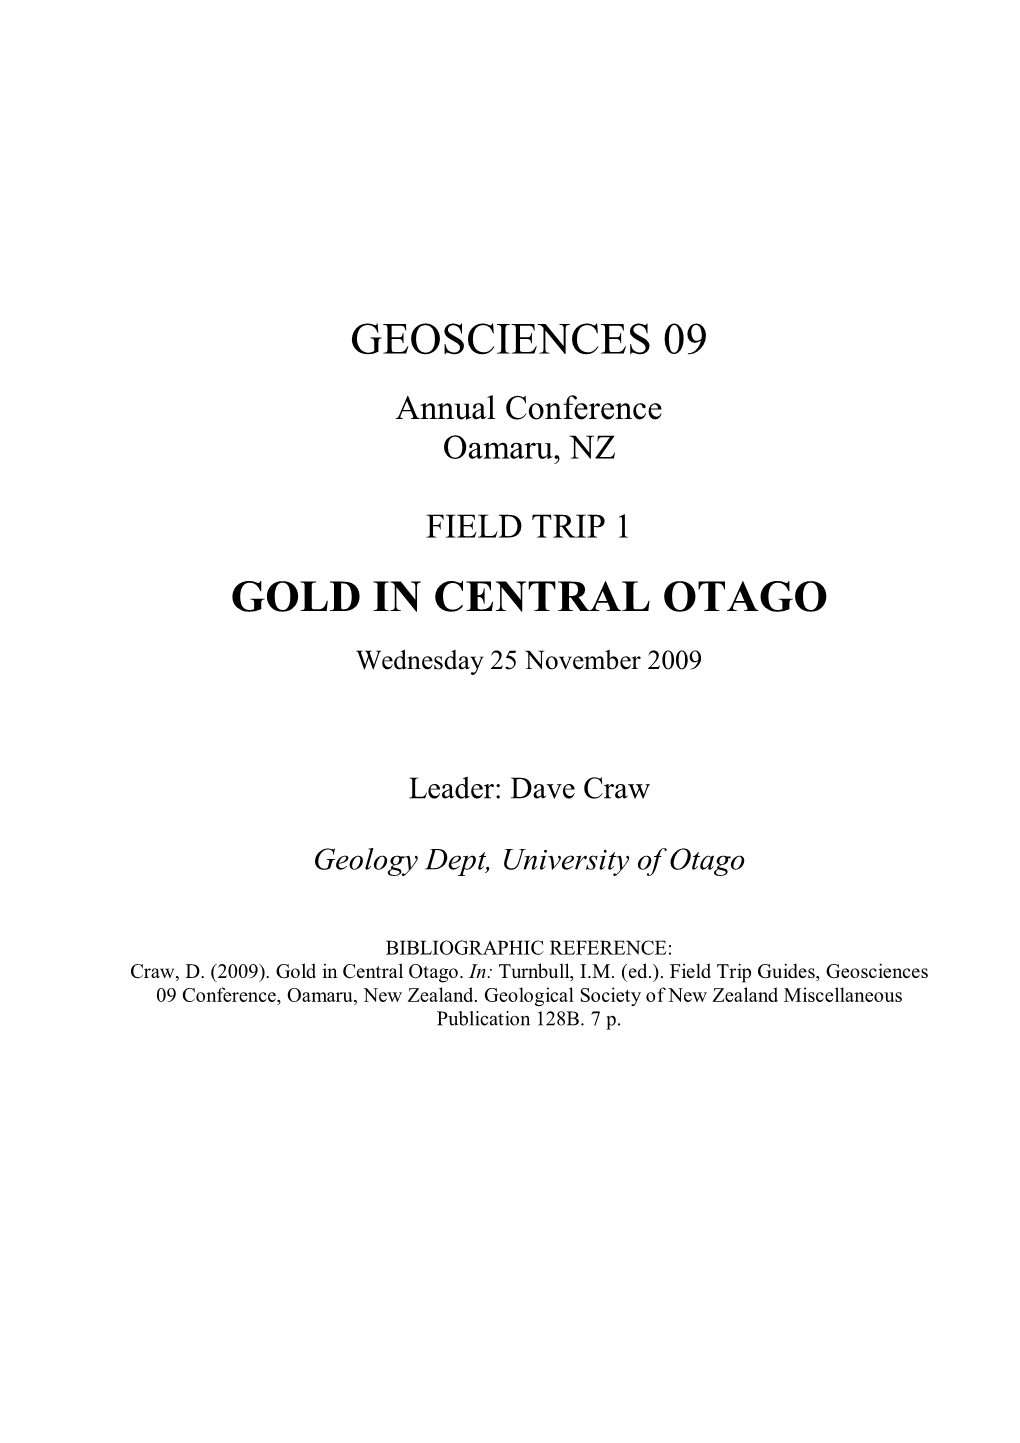 FT1 Central Otago Gold